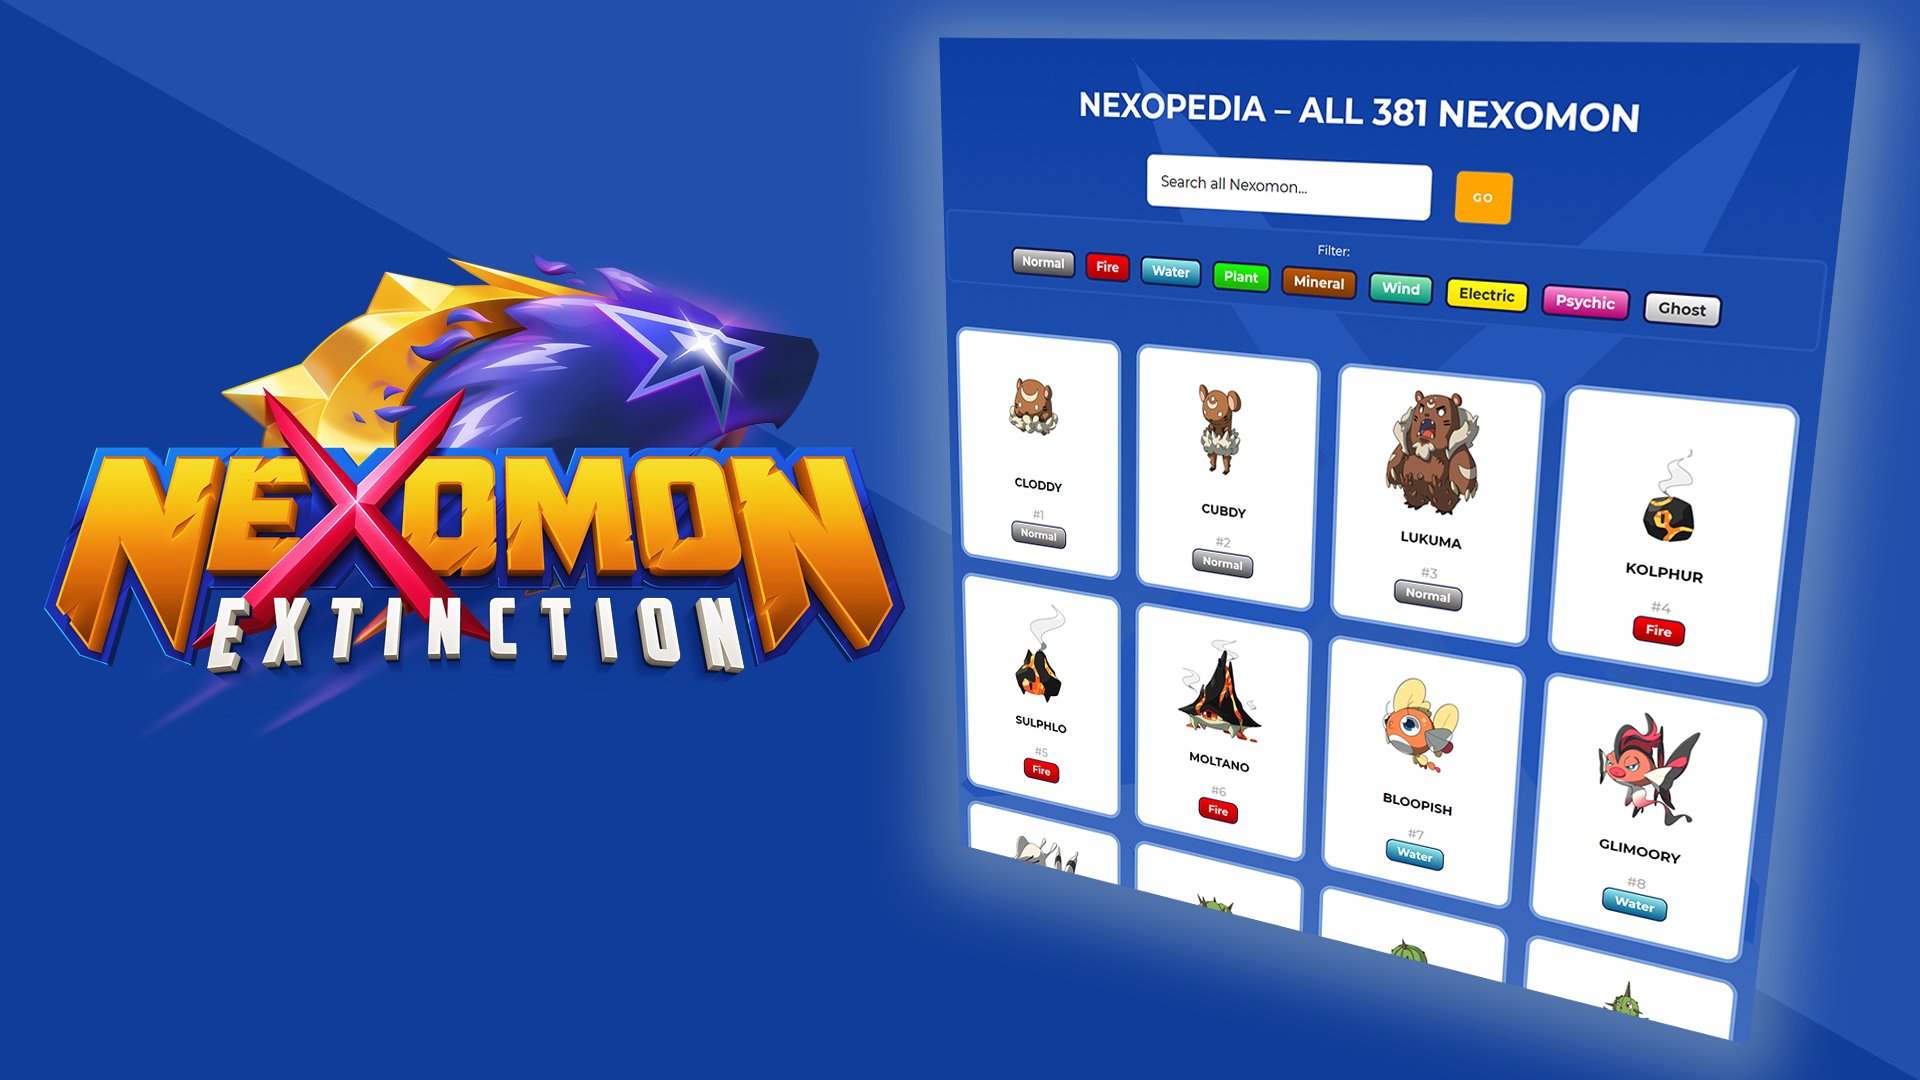 nexomon extinction price